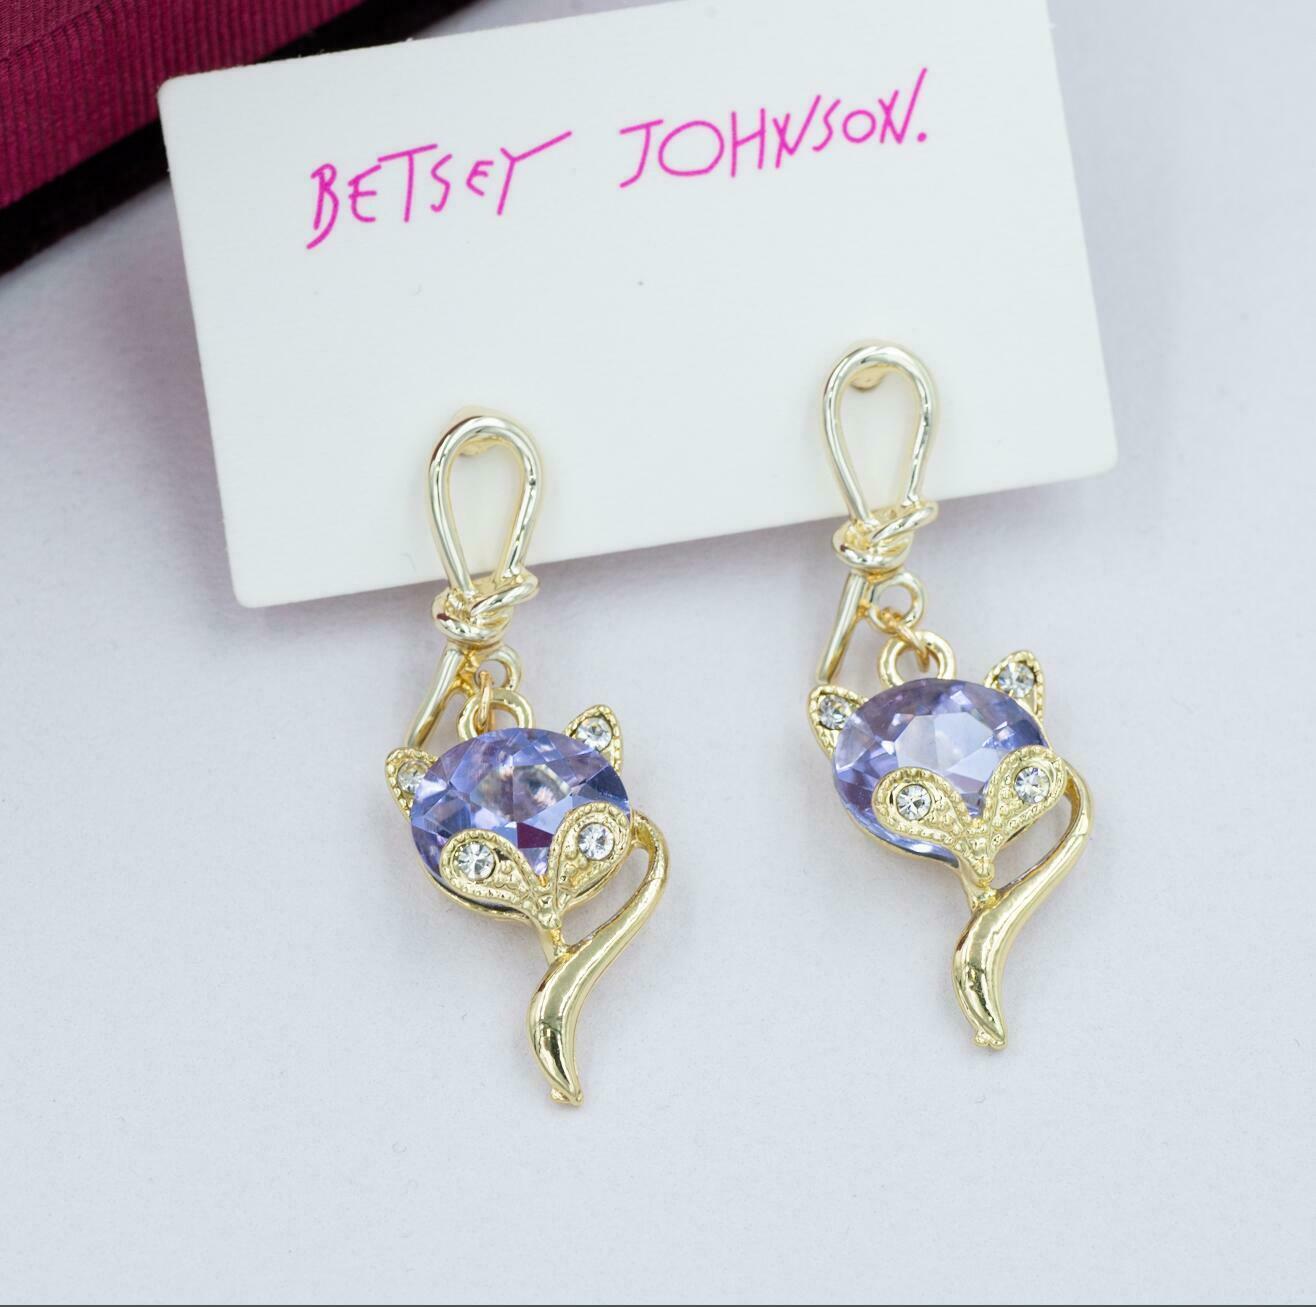 Betsey Johnson Princess Fox Earrings | Fox earrings, Betsey, Betsey johnson